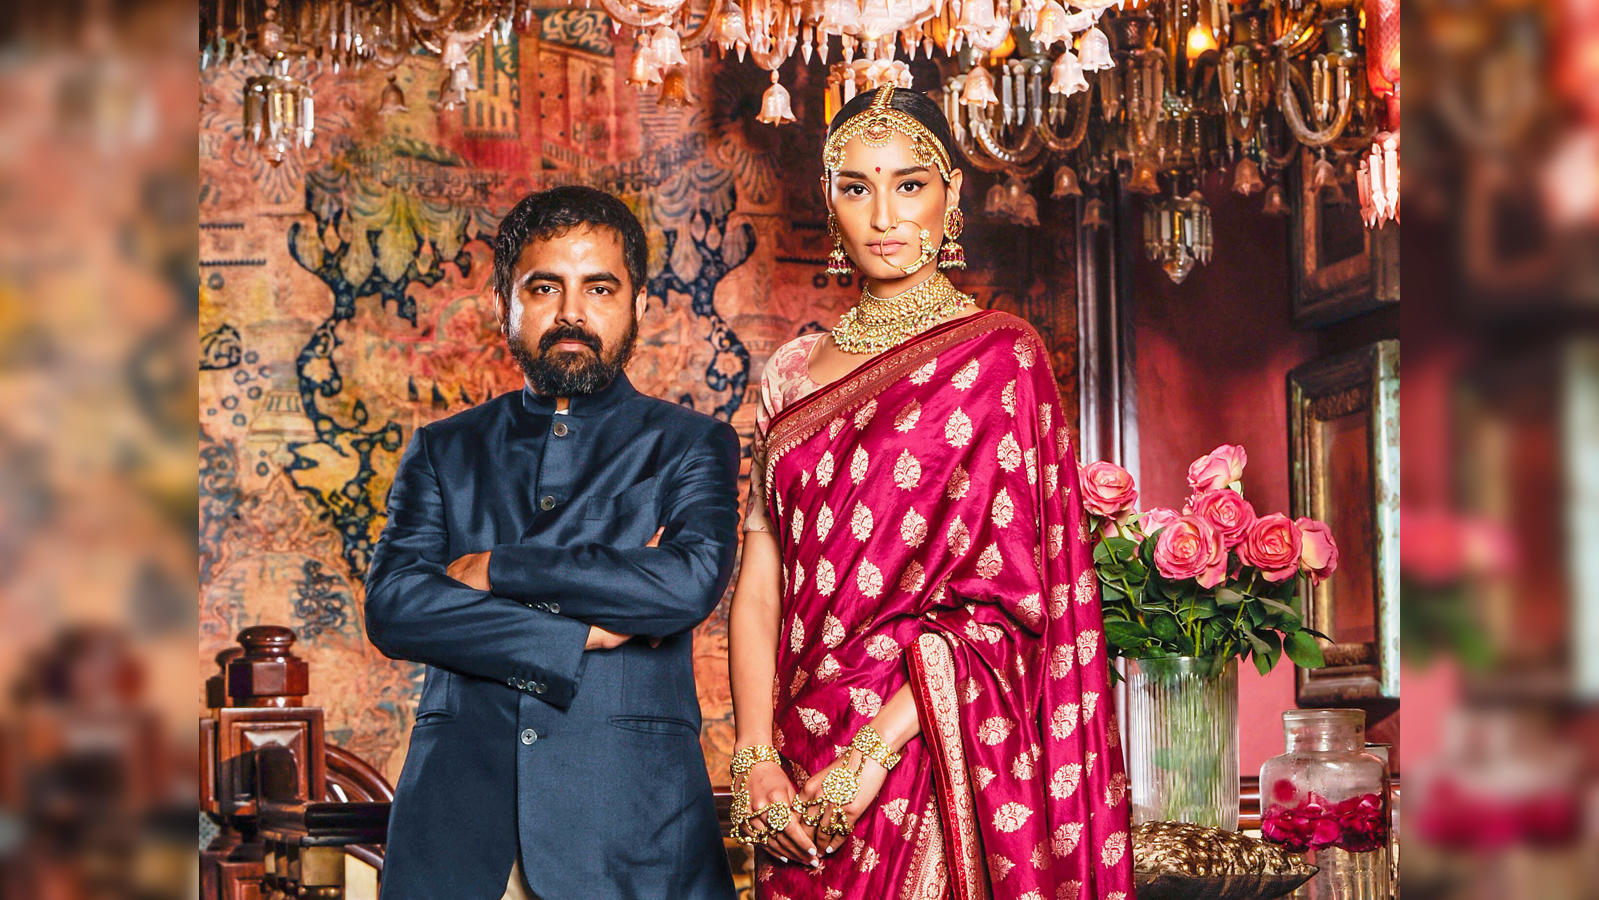 The bride Katrina Kaif @katrinakaif in classic Sabyasachi red bridal lehenga❤️  The ace designer Sabyasachi Mukherjee shared the detai... | Instagram